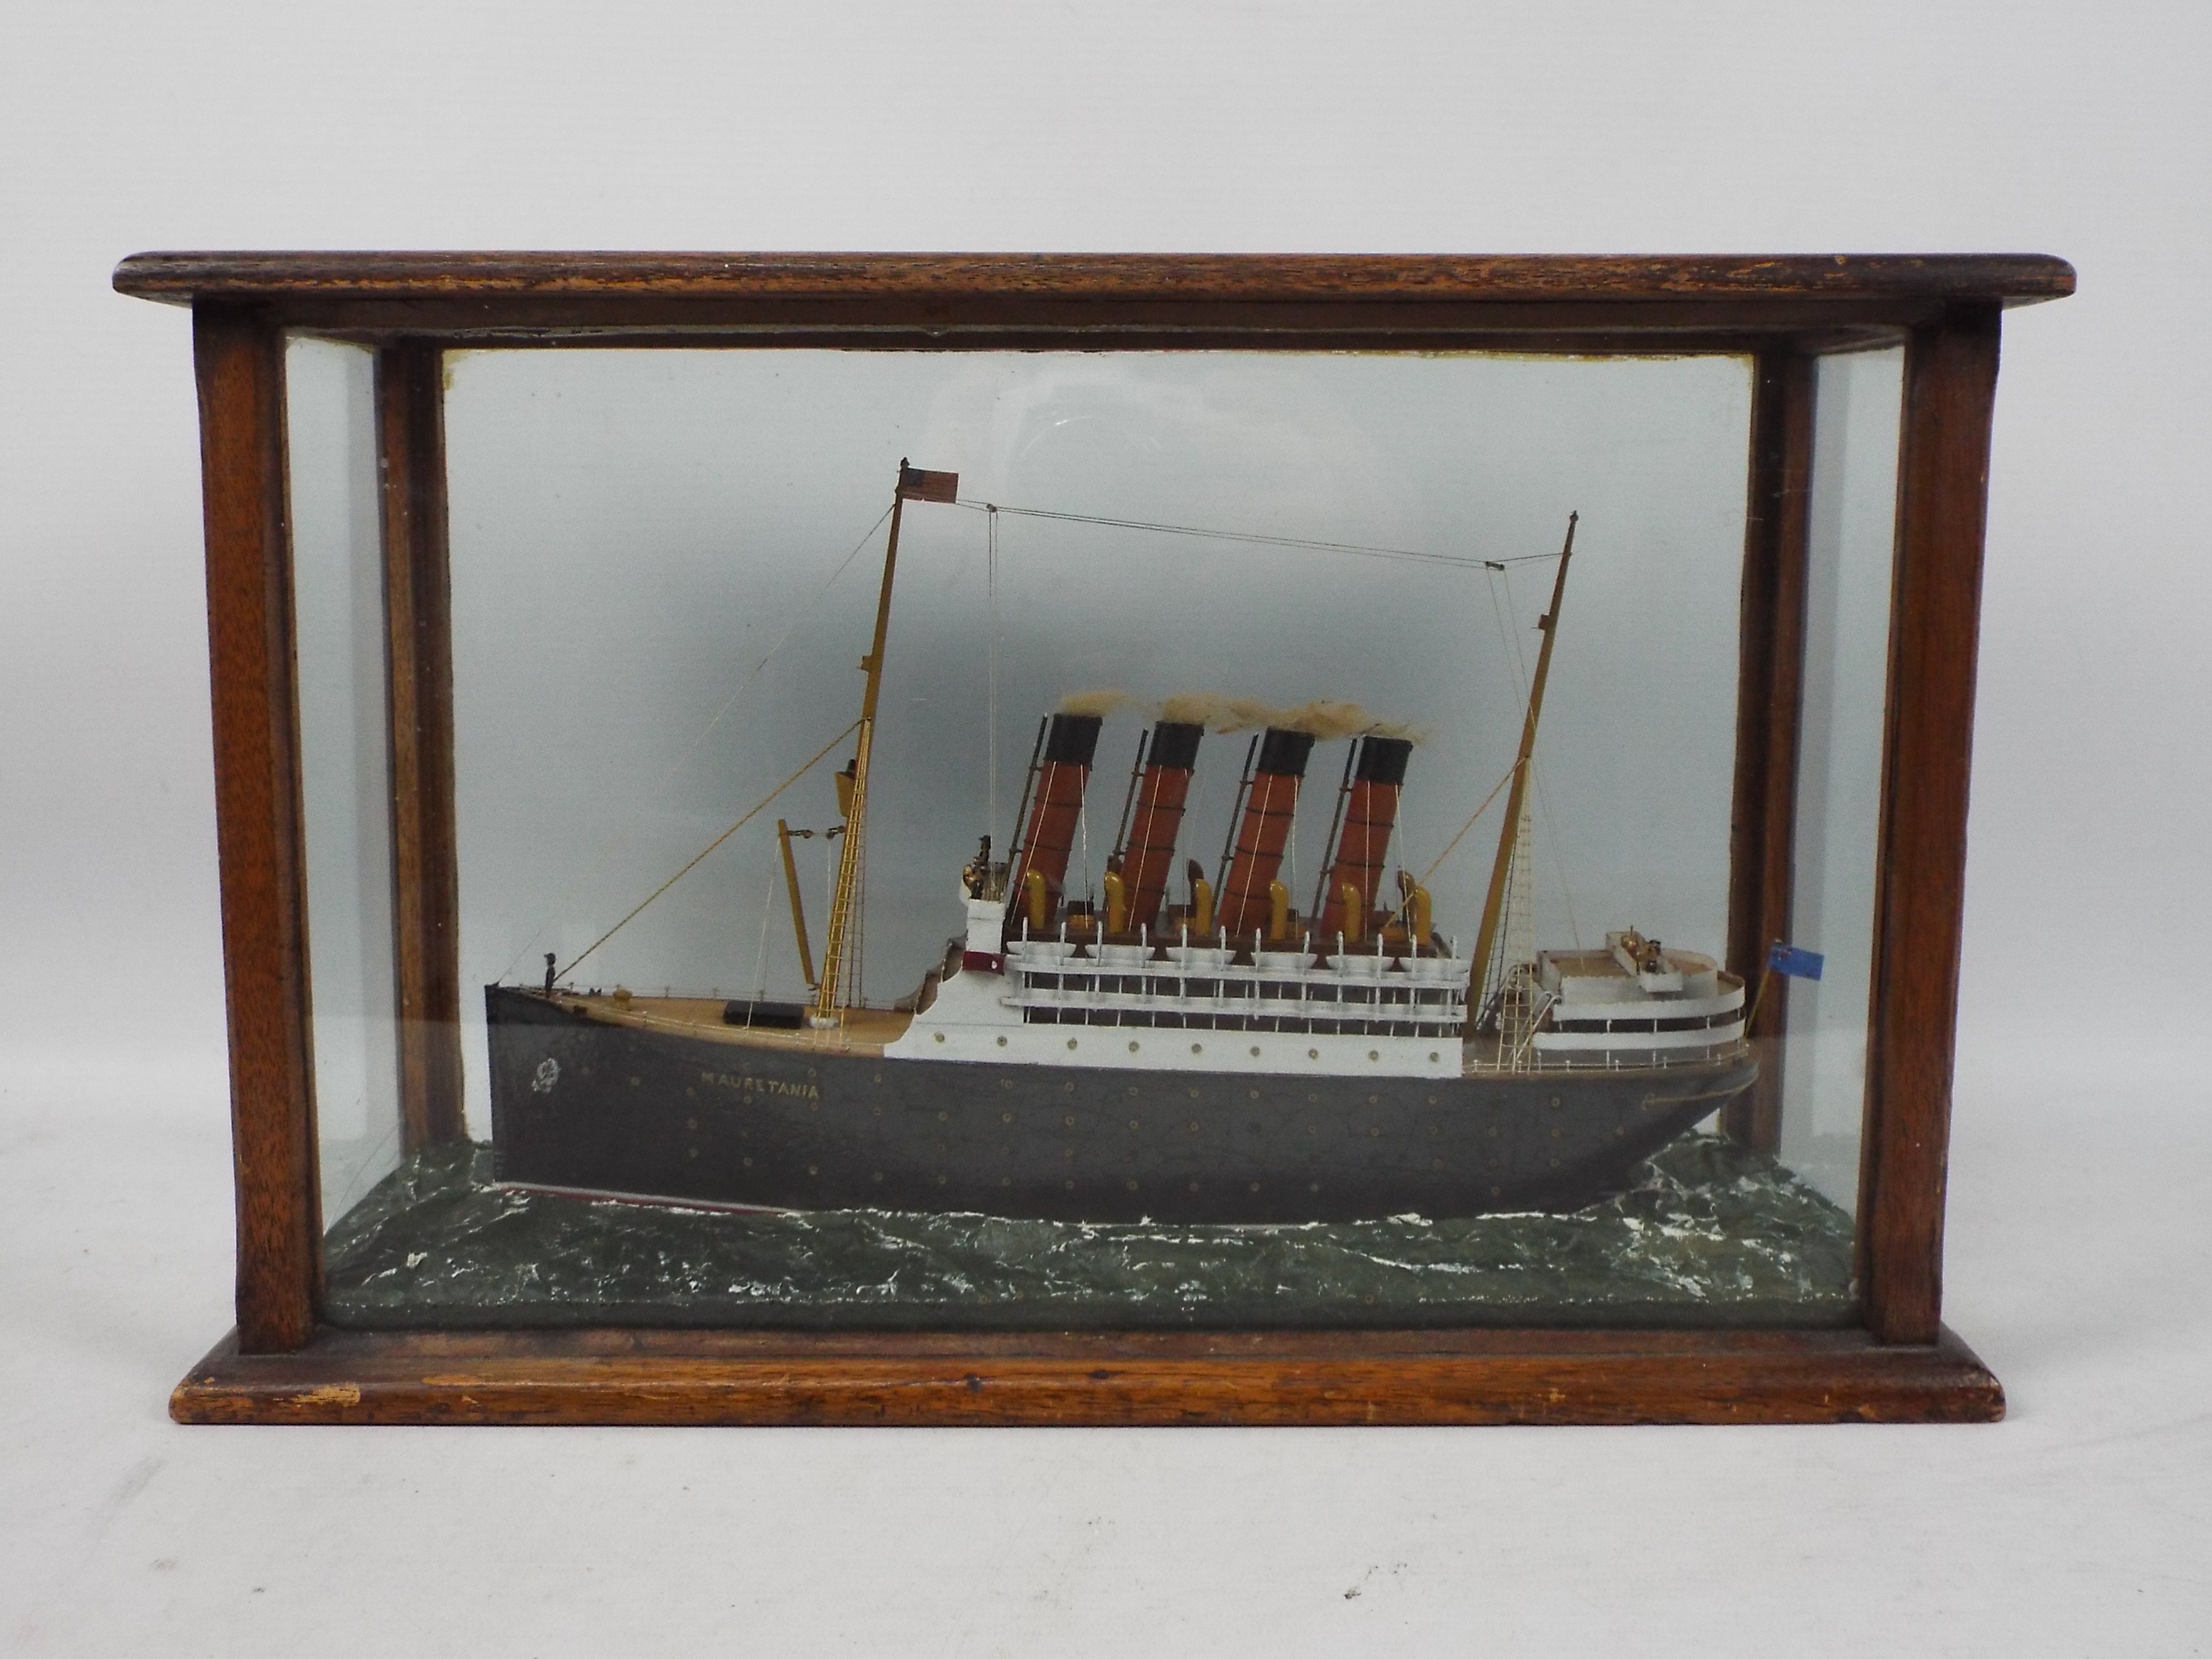 A scratch built model ship in glazed display depicting RMS Mauretania,